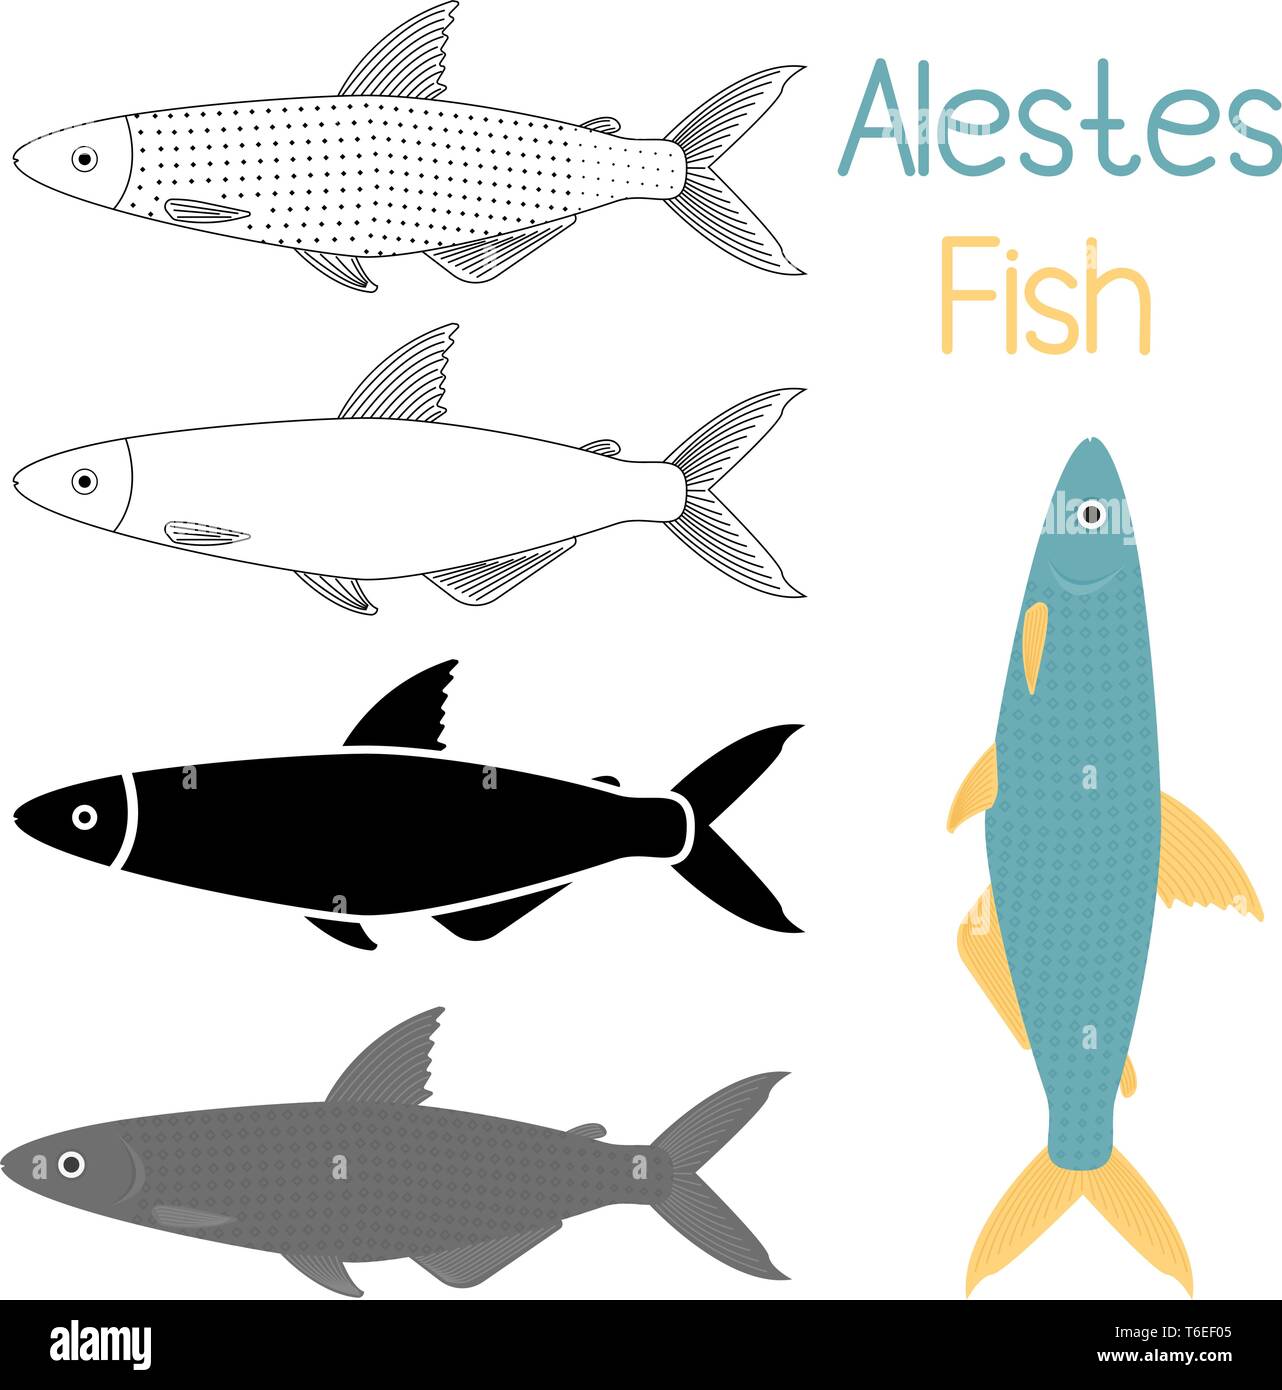 Fish icon set, Alestes liebrecht ii or Alestes ansorgii vector illustration Stock Vector